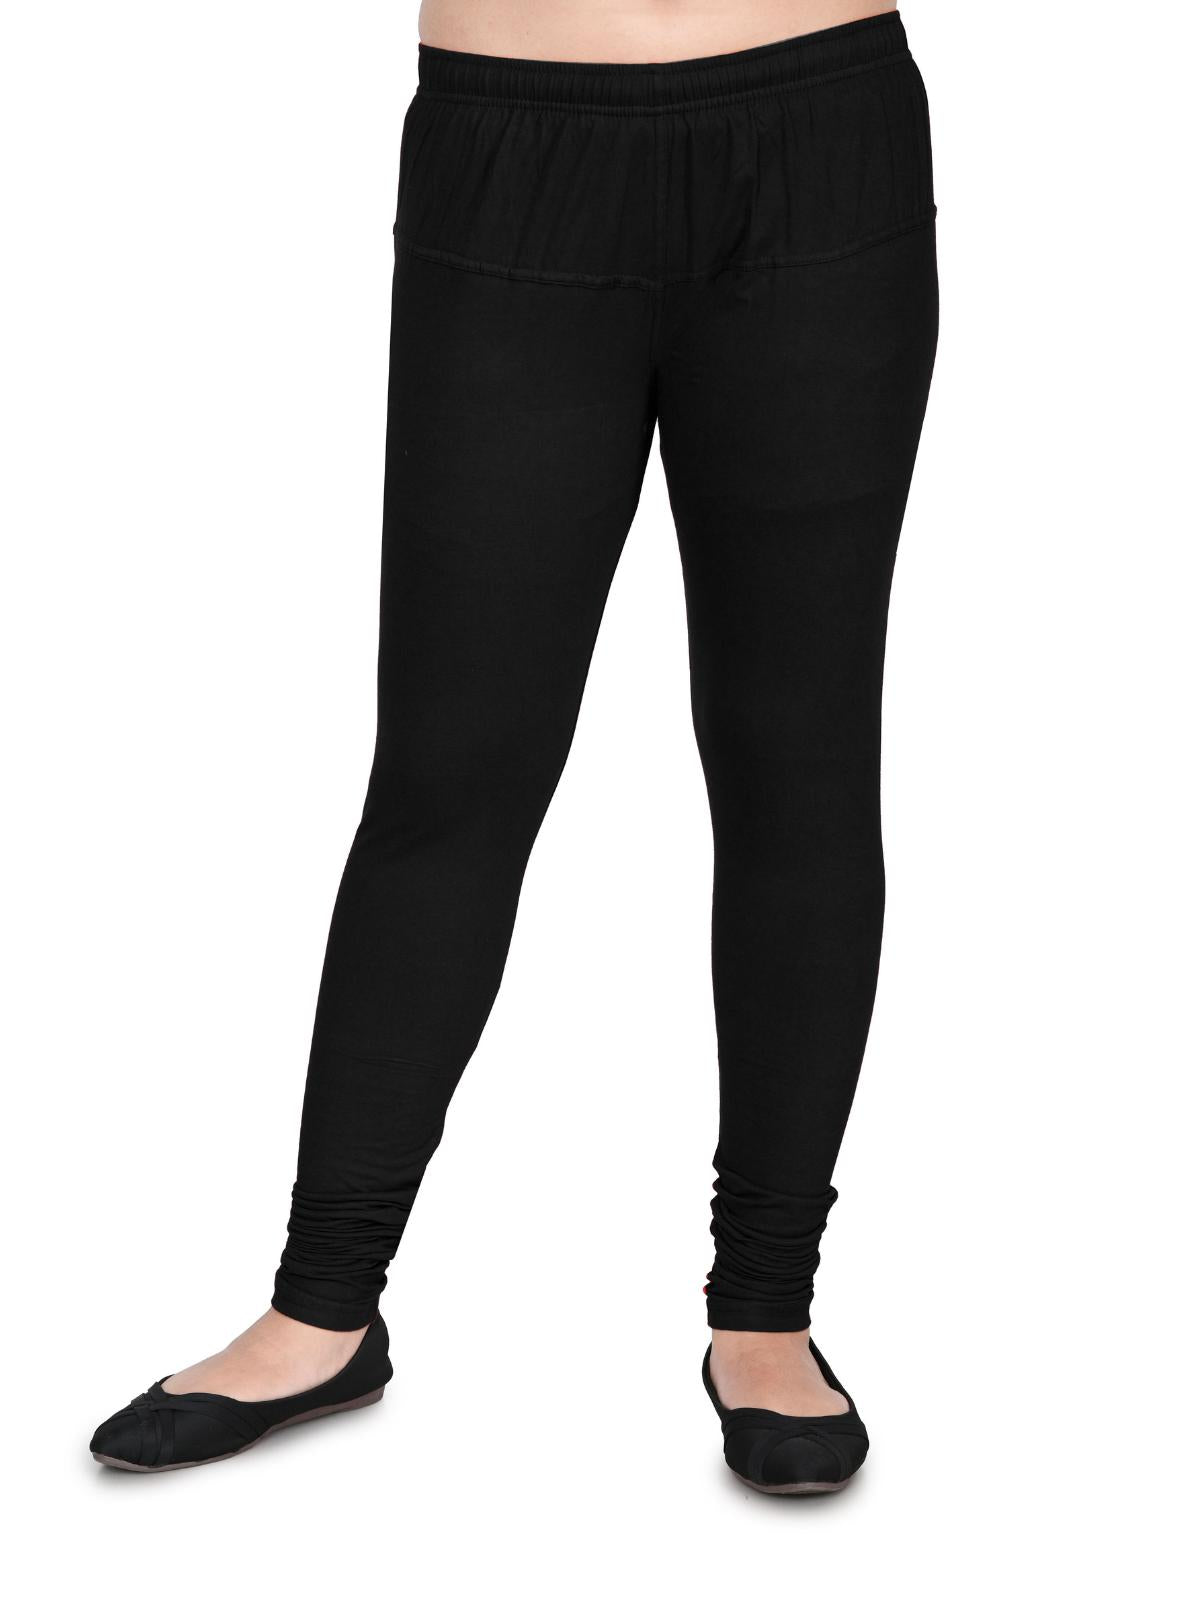 Black Leebonee Women's Cotton Lycra Churidar Leggings Plus Size (XXL-5XL),  Size: XXL to 5XL at Rs 245 in Ludhiana